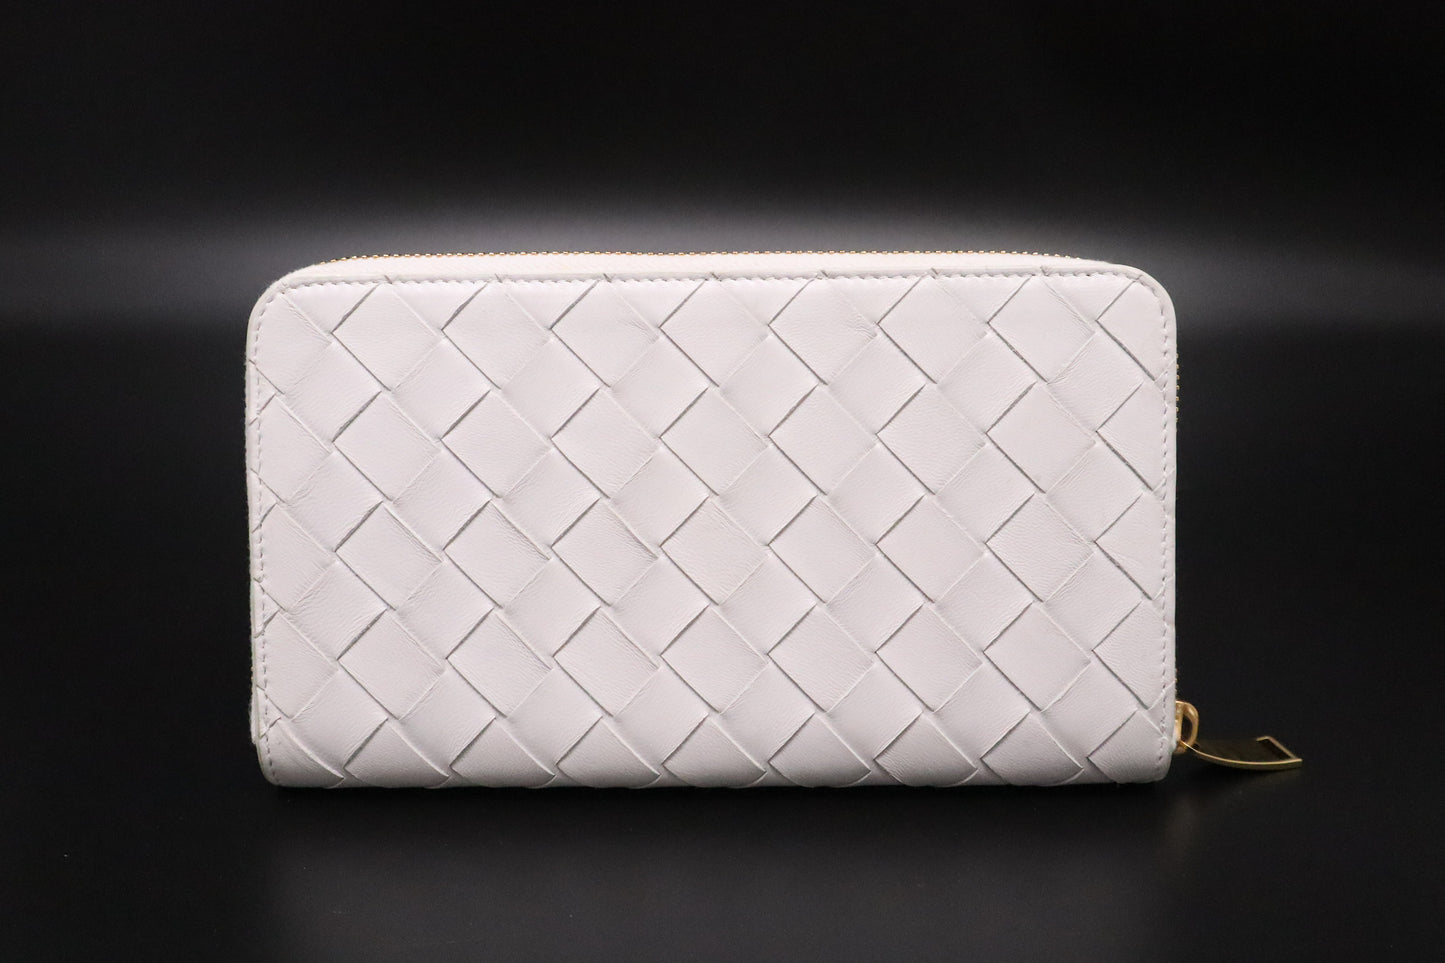 Bottega Veneta Zippy Wallet in White Intrecciato Leather